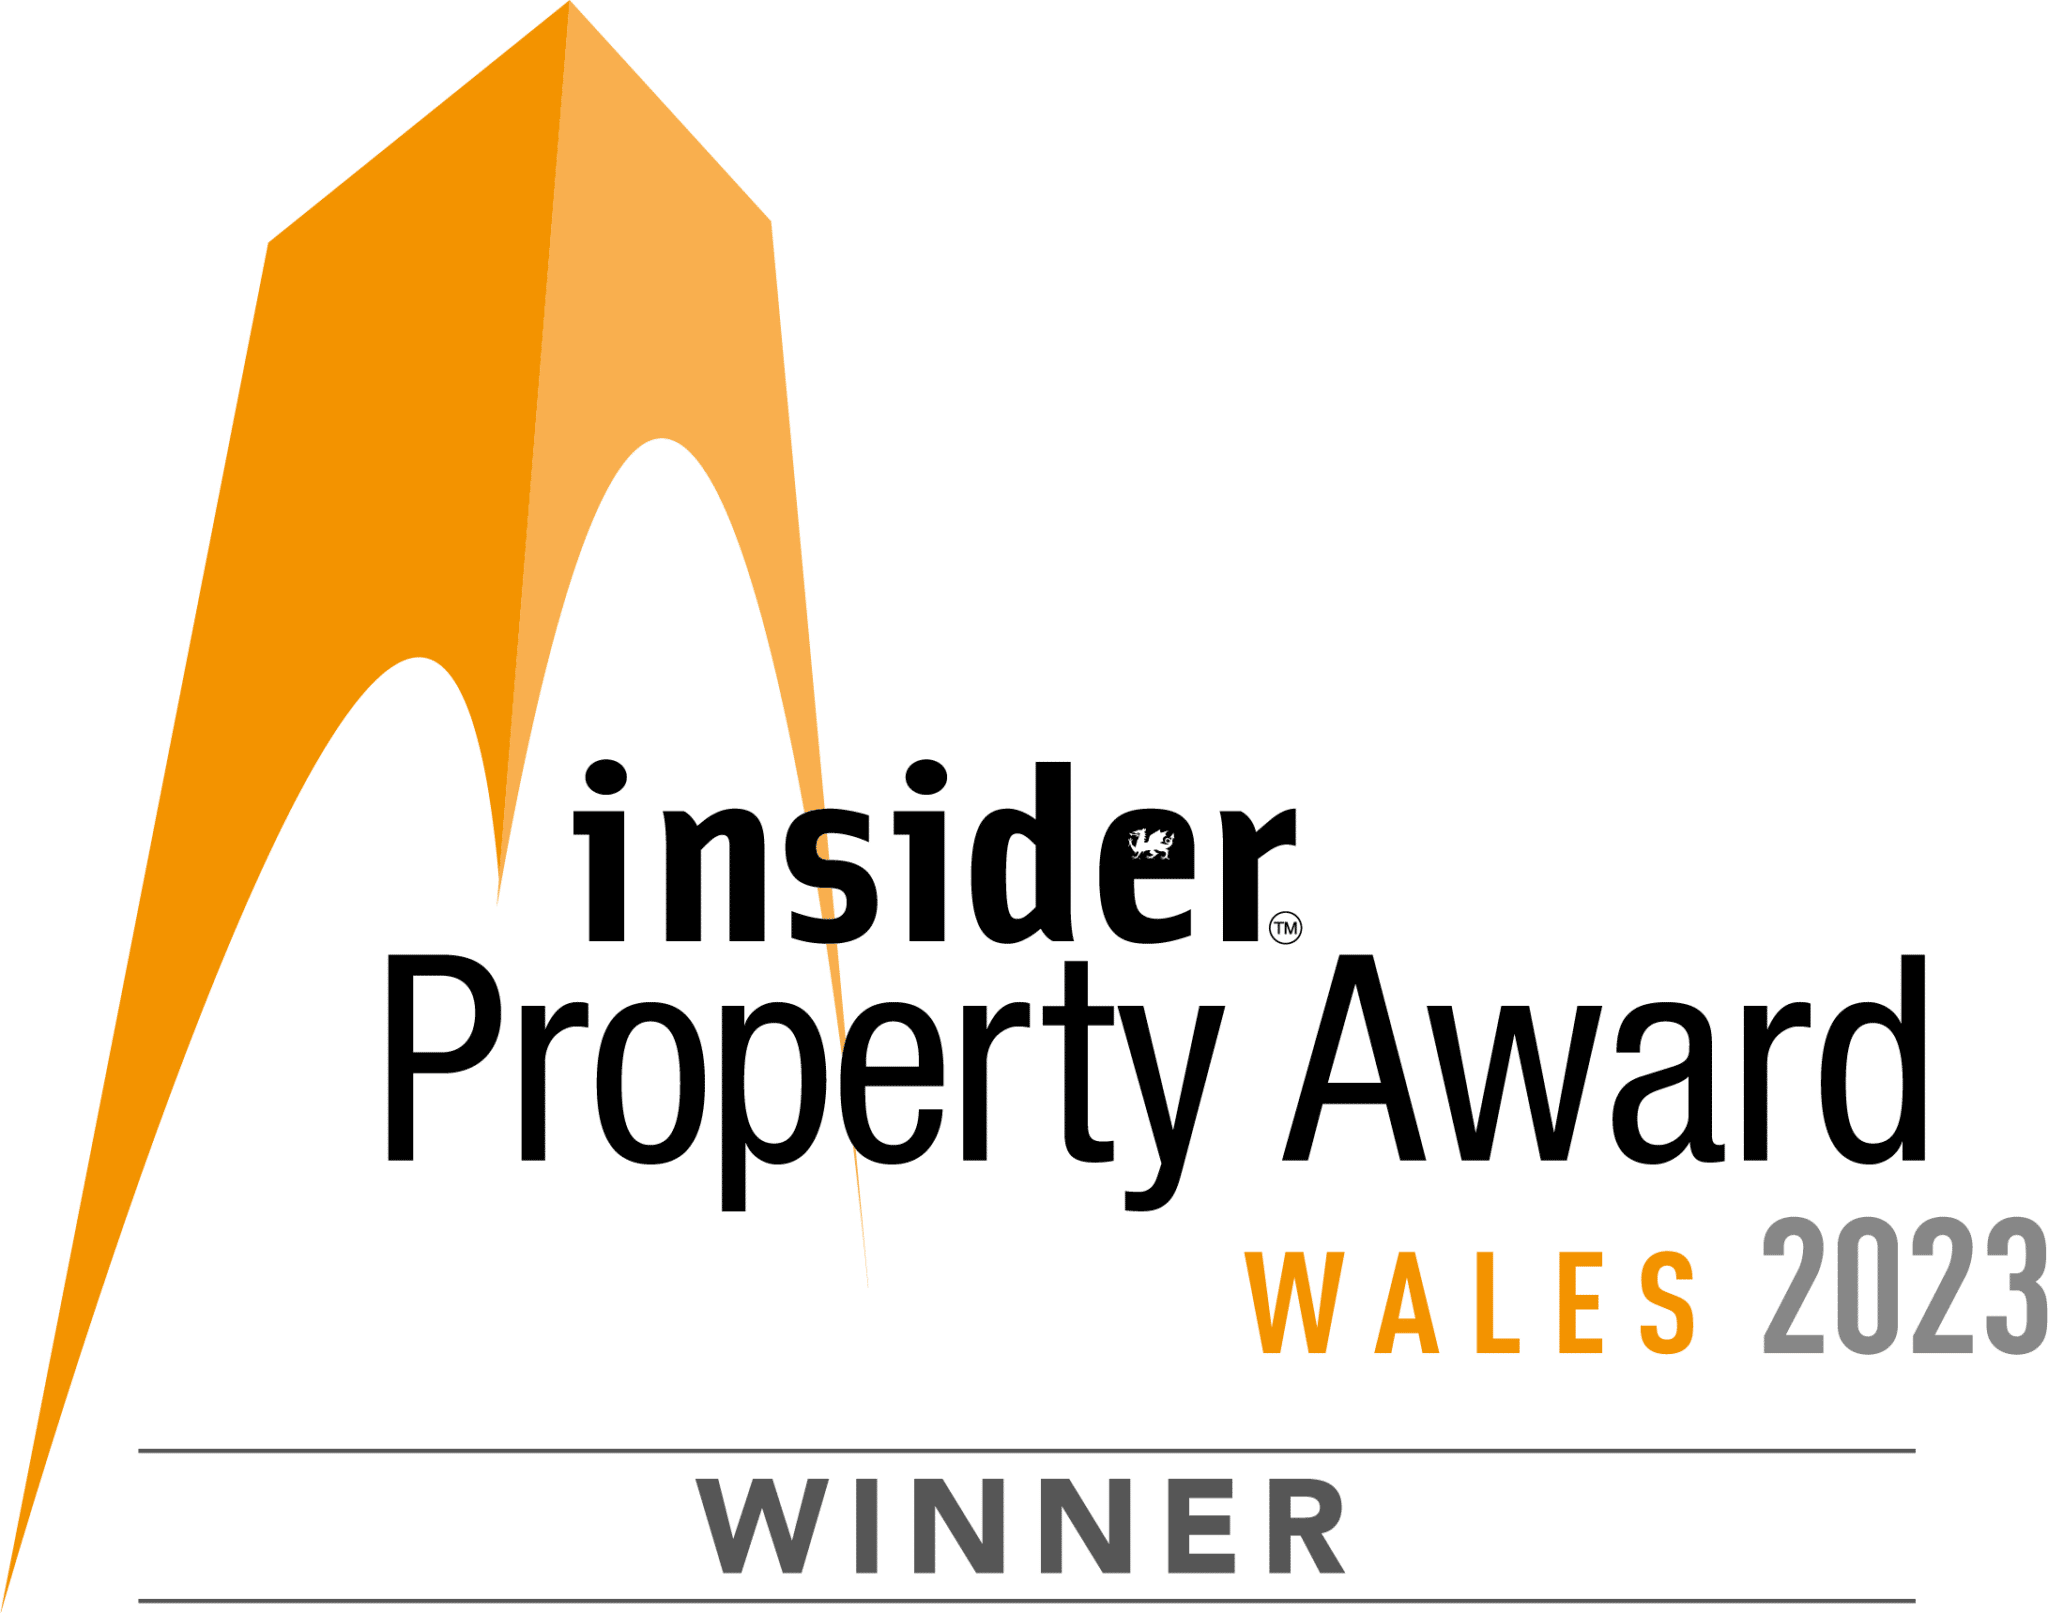 Wales Property Awards winner logo